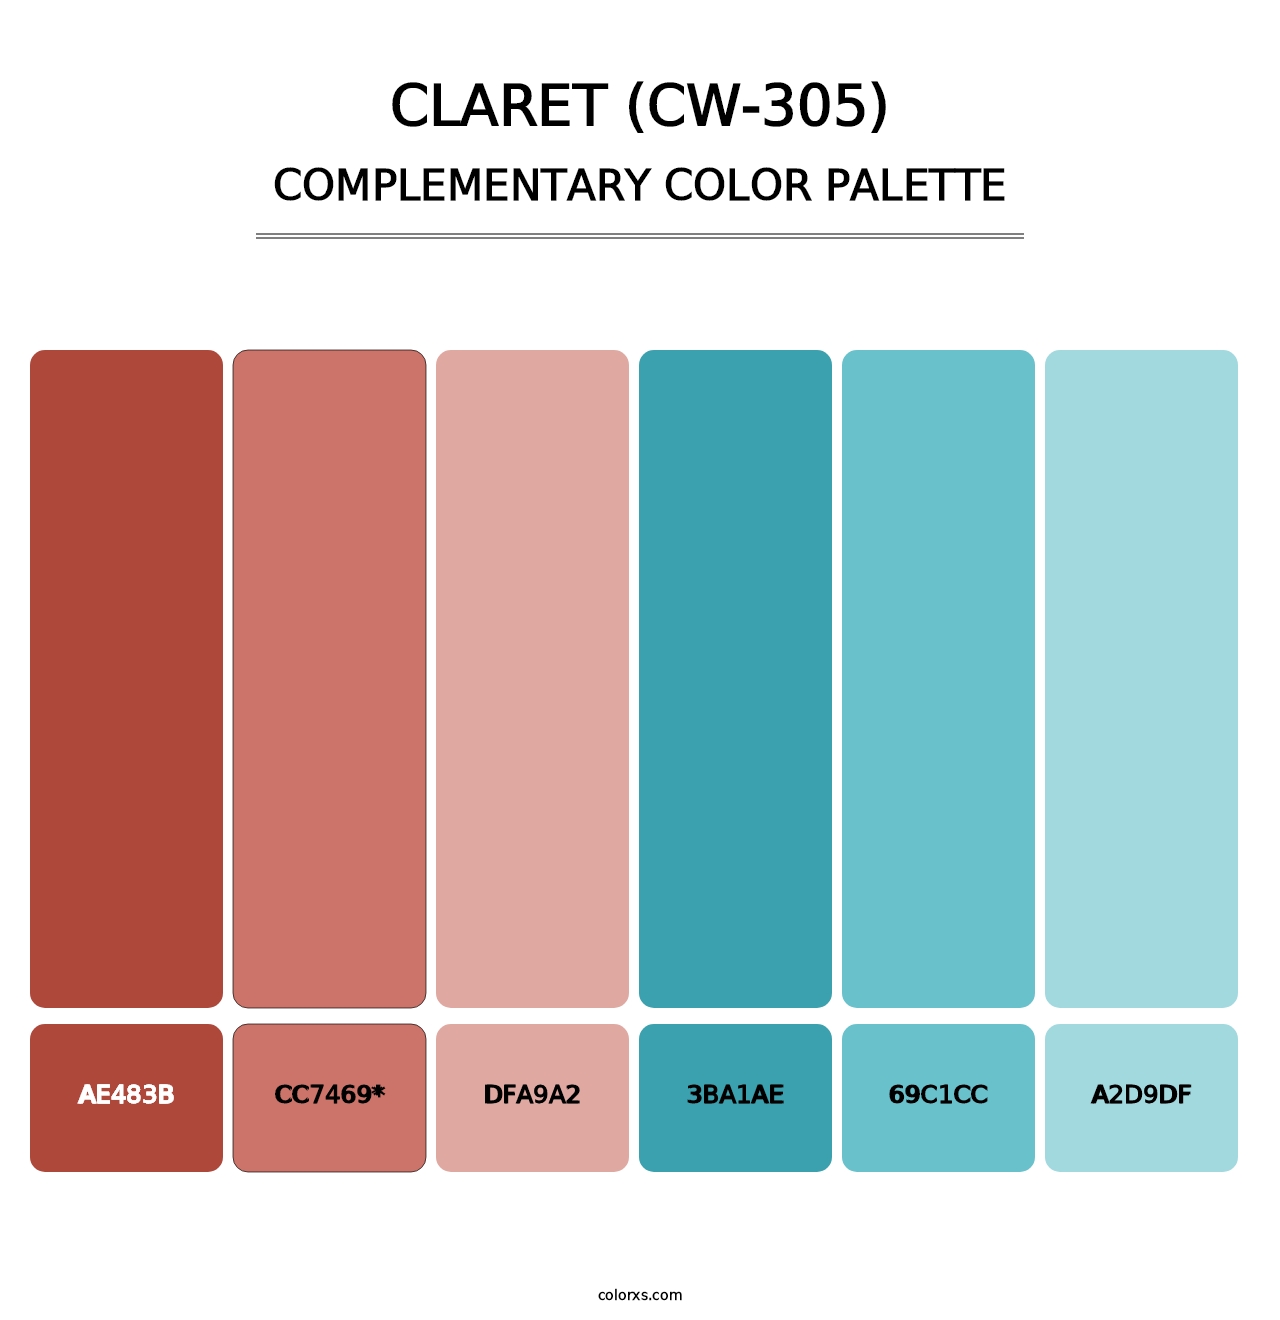 Claret (CW-305) - Complementary Color Palette